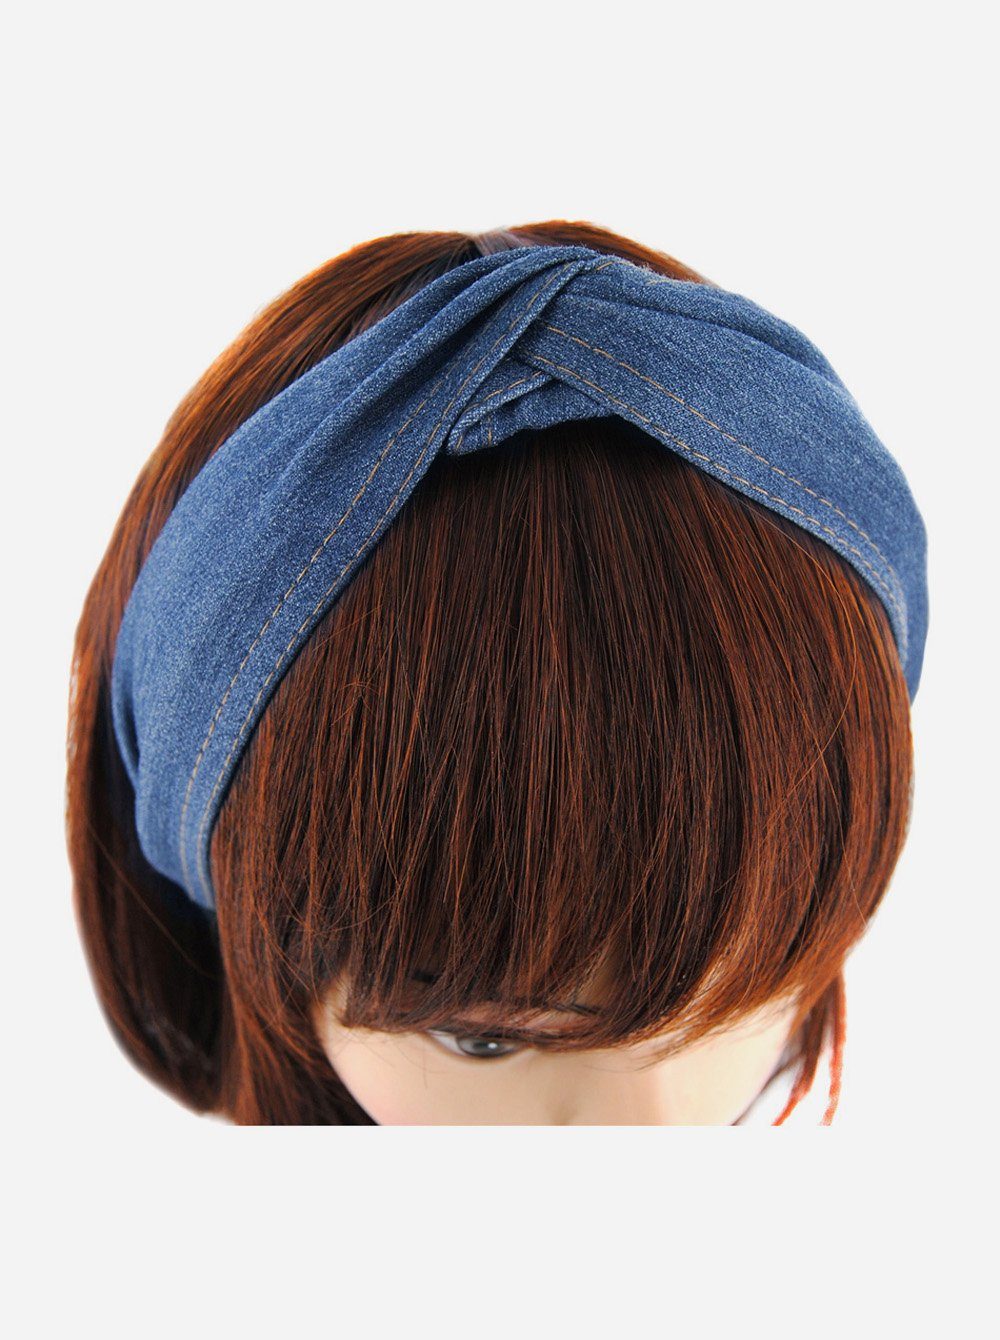 Haarband Haarreif Damen Jeansfarbe Stoff, Knoten und Haarreif mit Vintage raffinierten Jeans Haareifen Klassik-Look axy